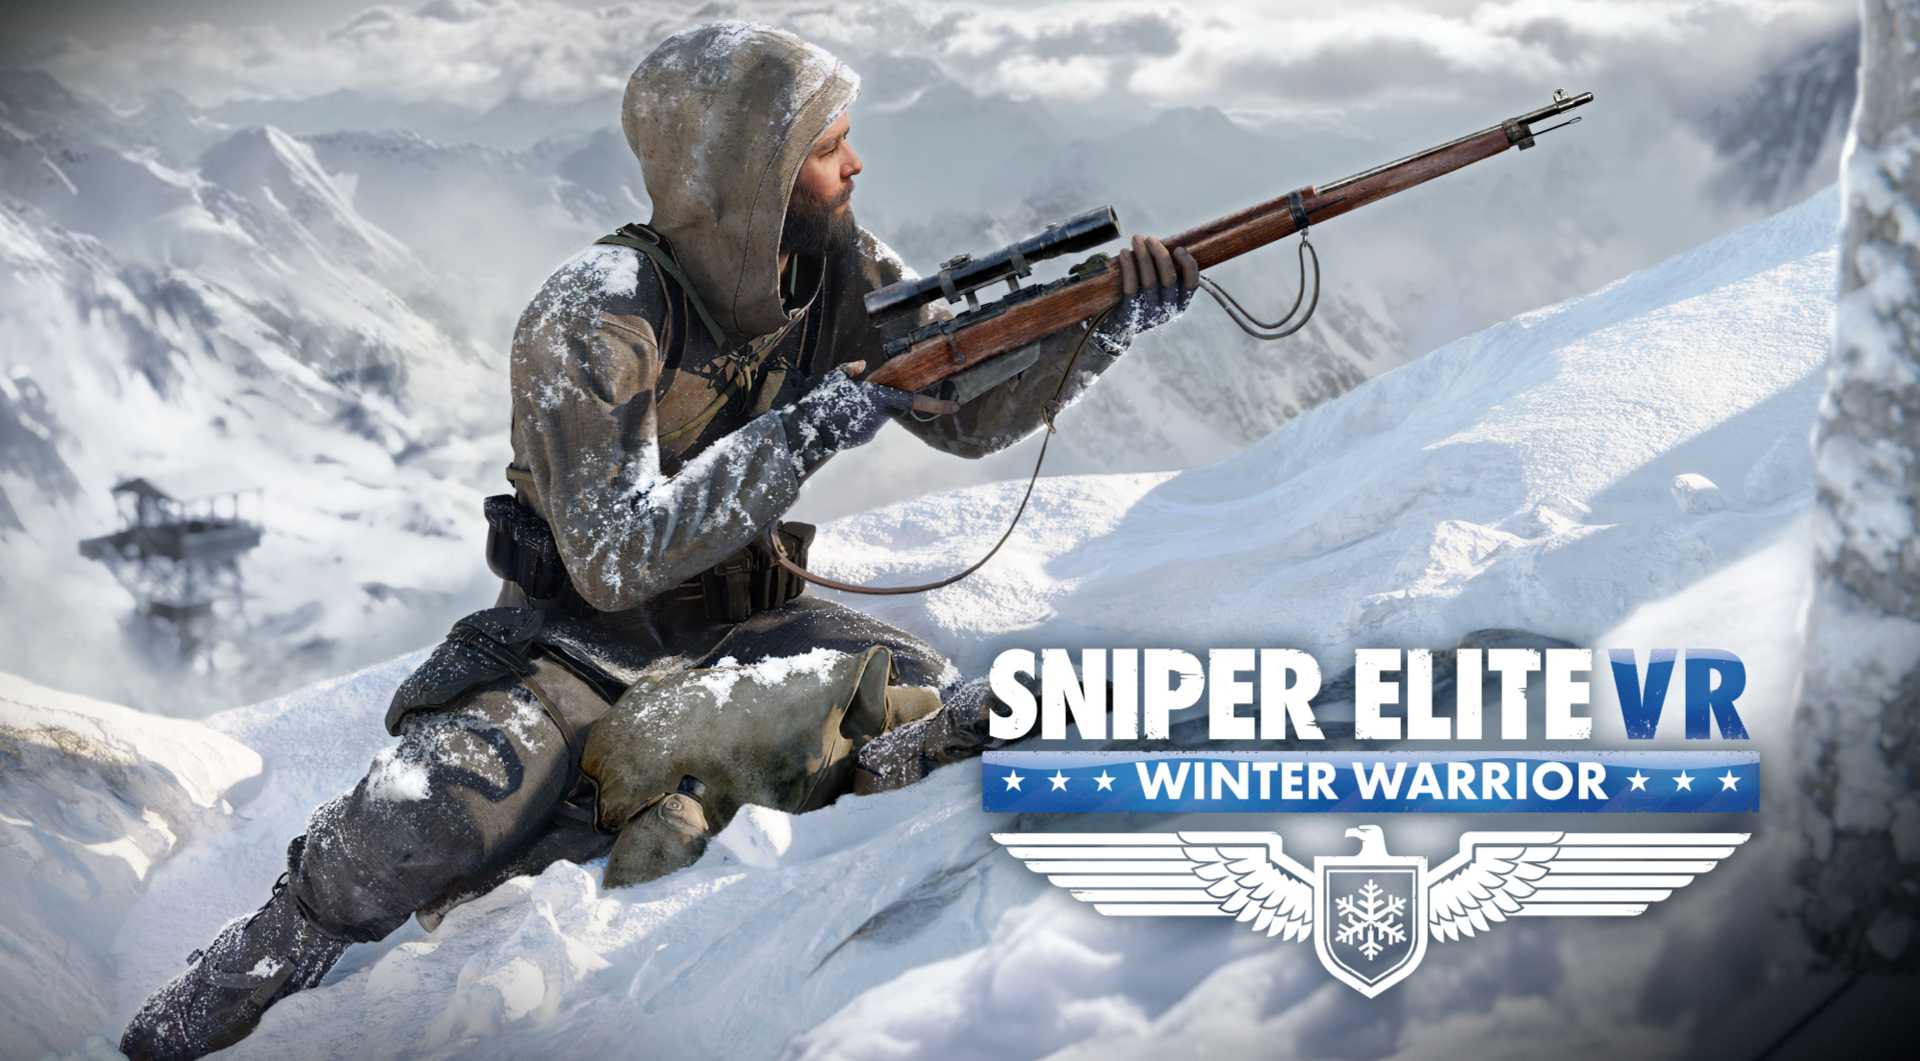 Sniper Elite VR: Winter Warrior will be released on November 30 for Meta Quest